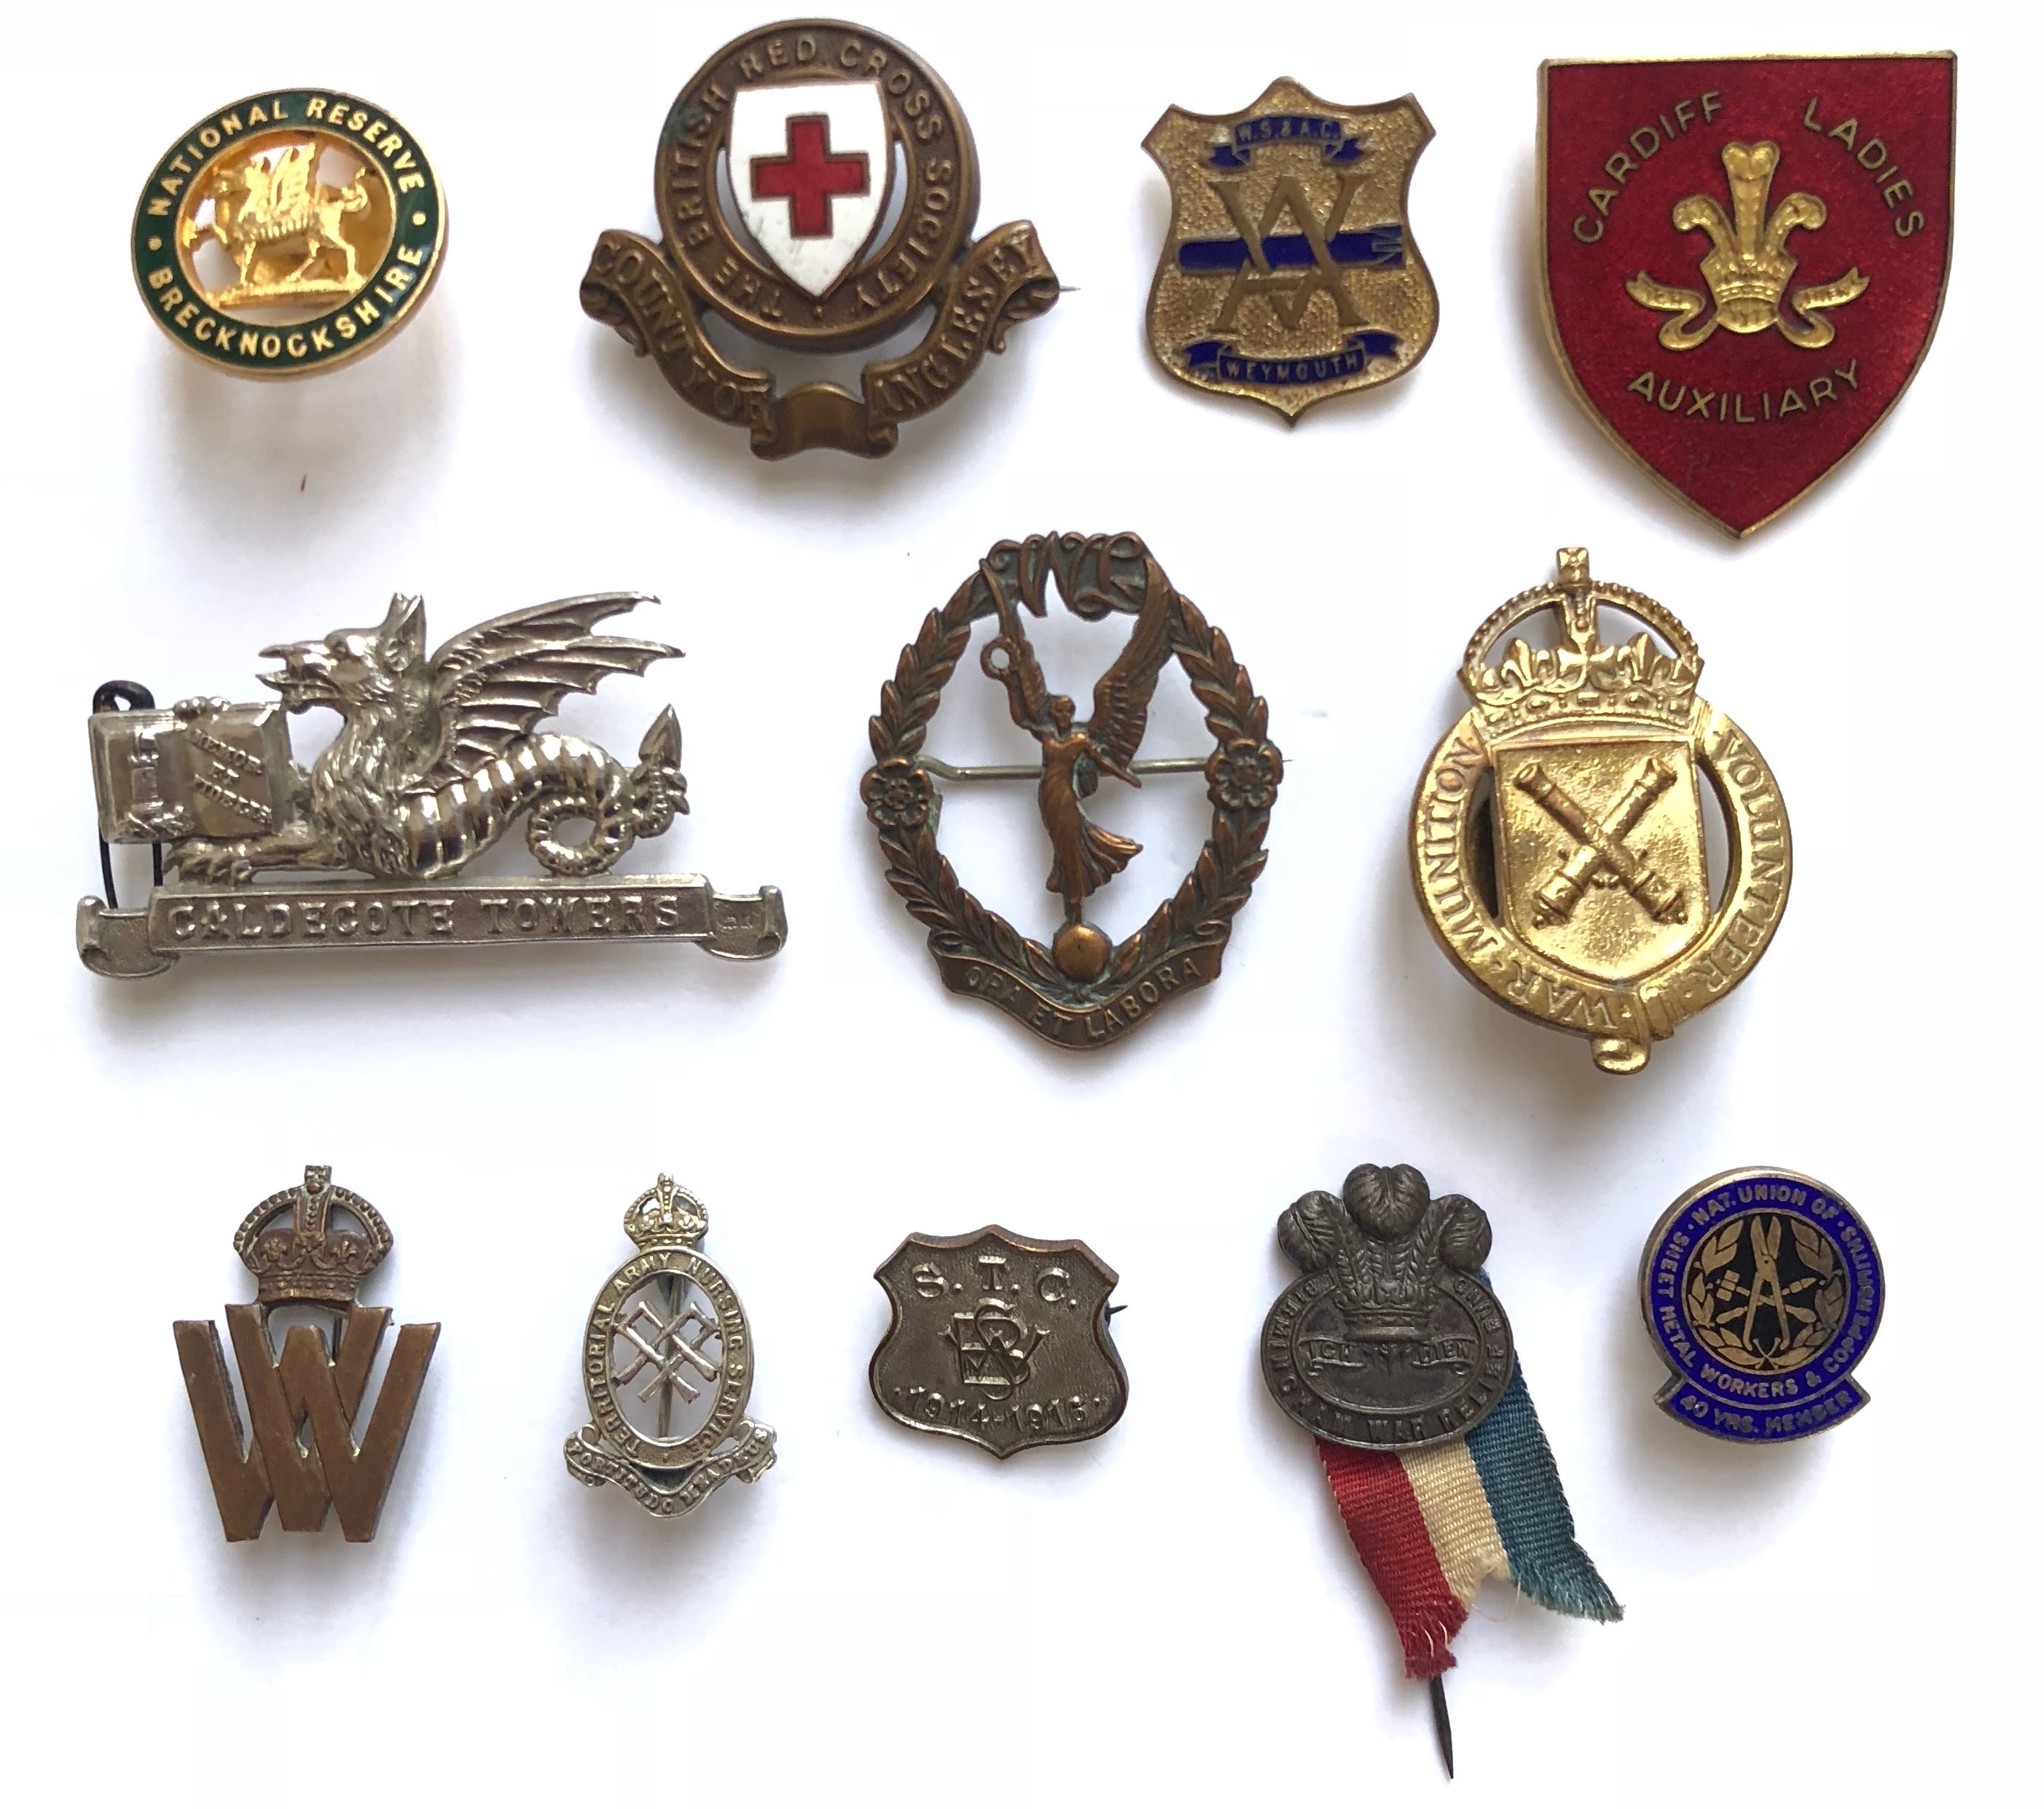 12 WW1 Home Front Lapel Badges etc Including Welsh Interest. Including: National Reserve